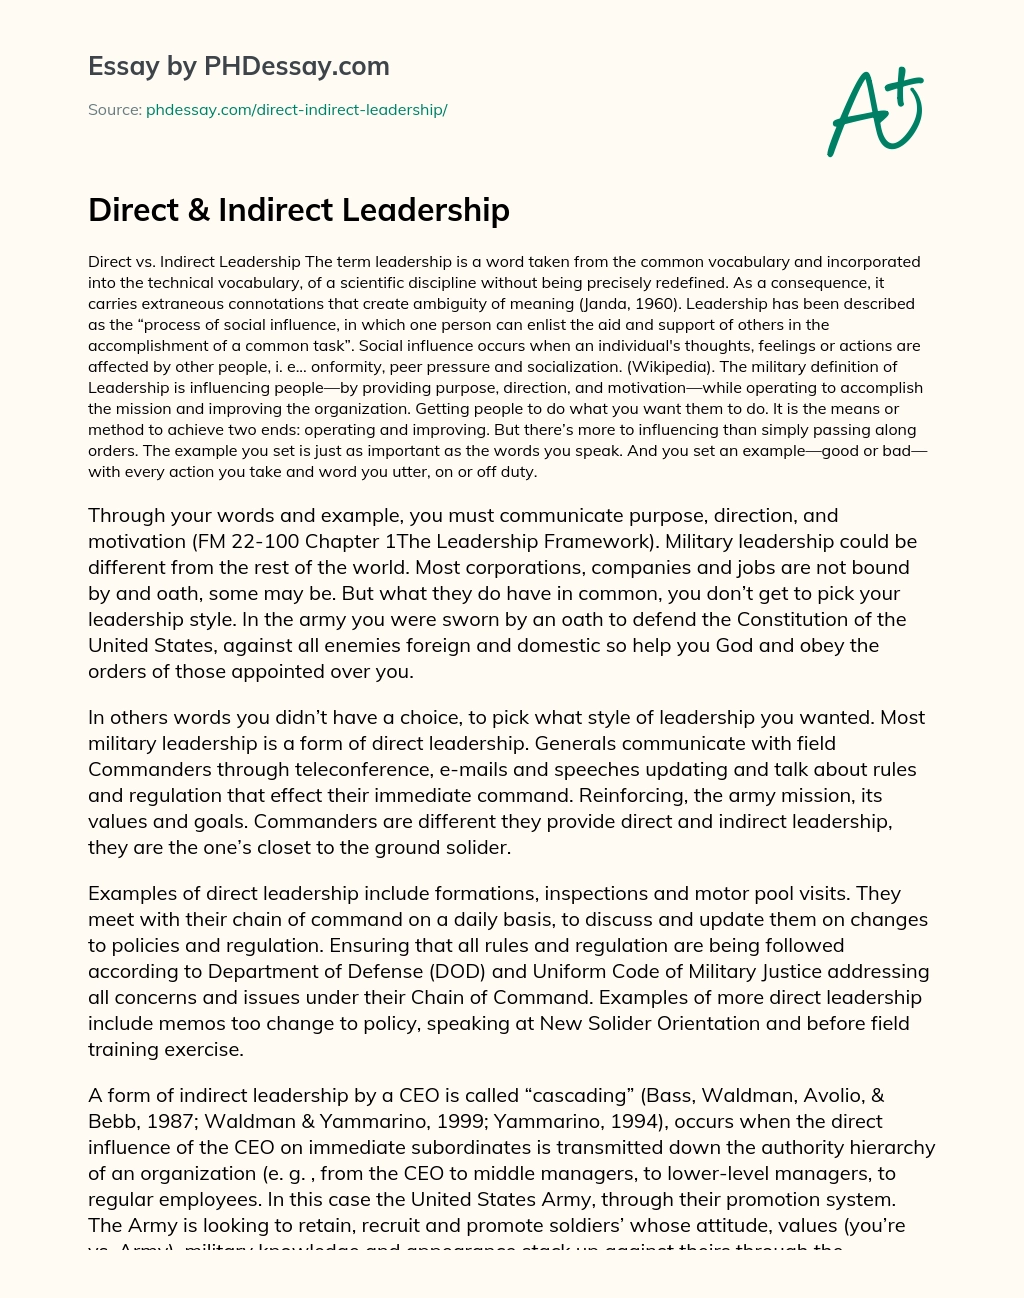 Direct & Indirect Leadership essay